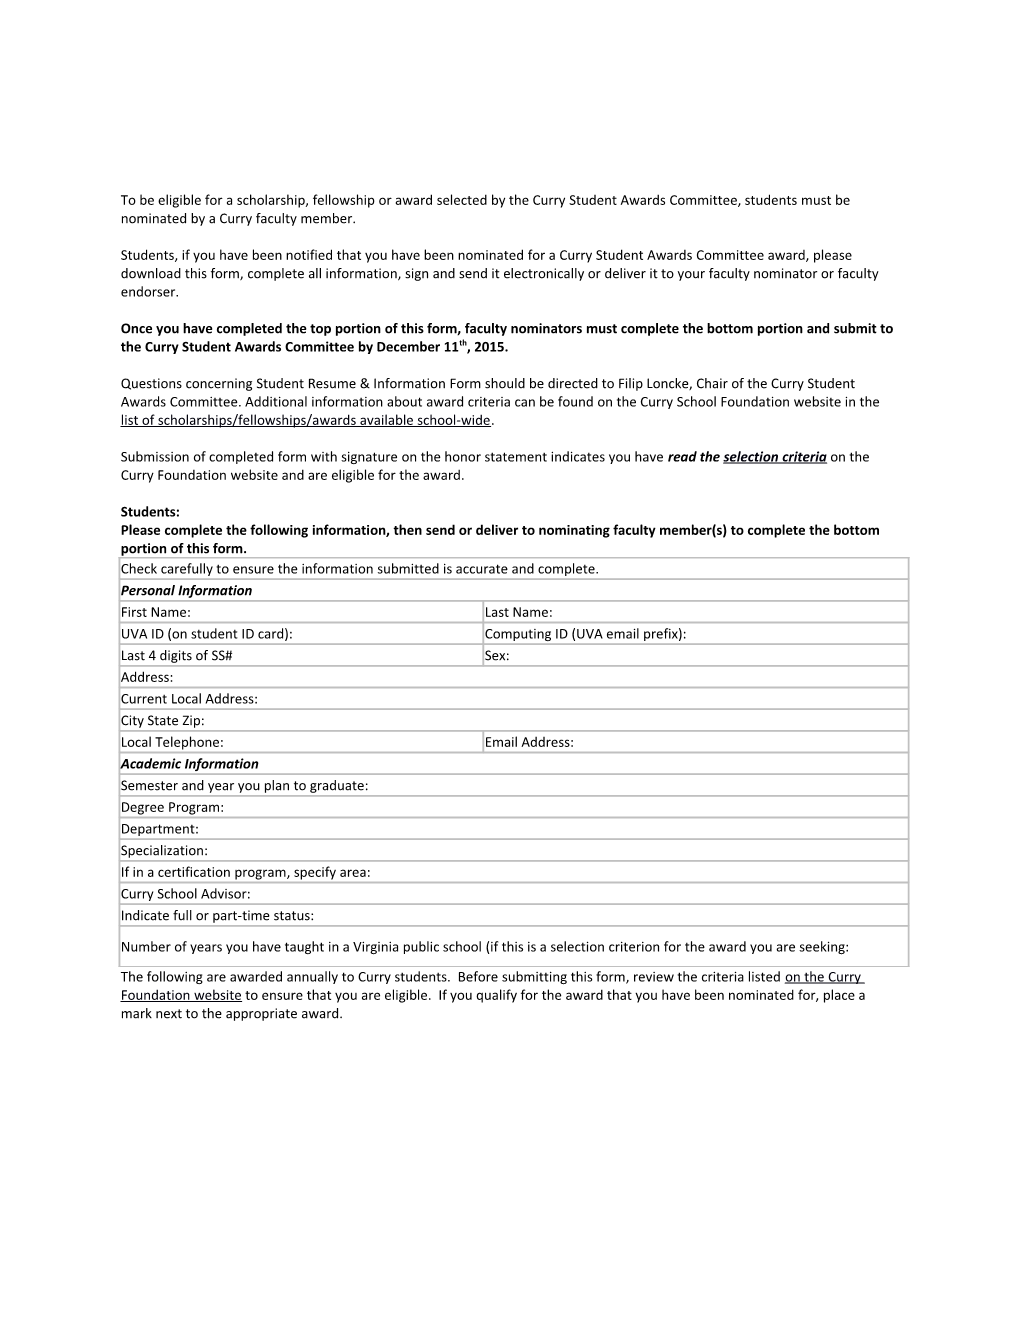 Student Resume & Information Form